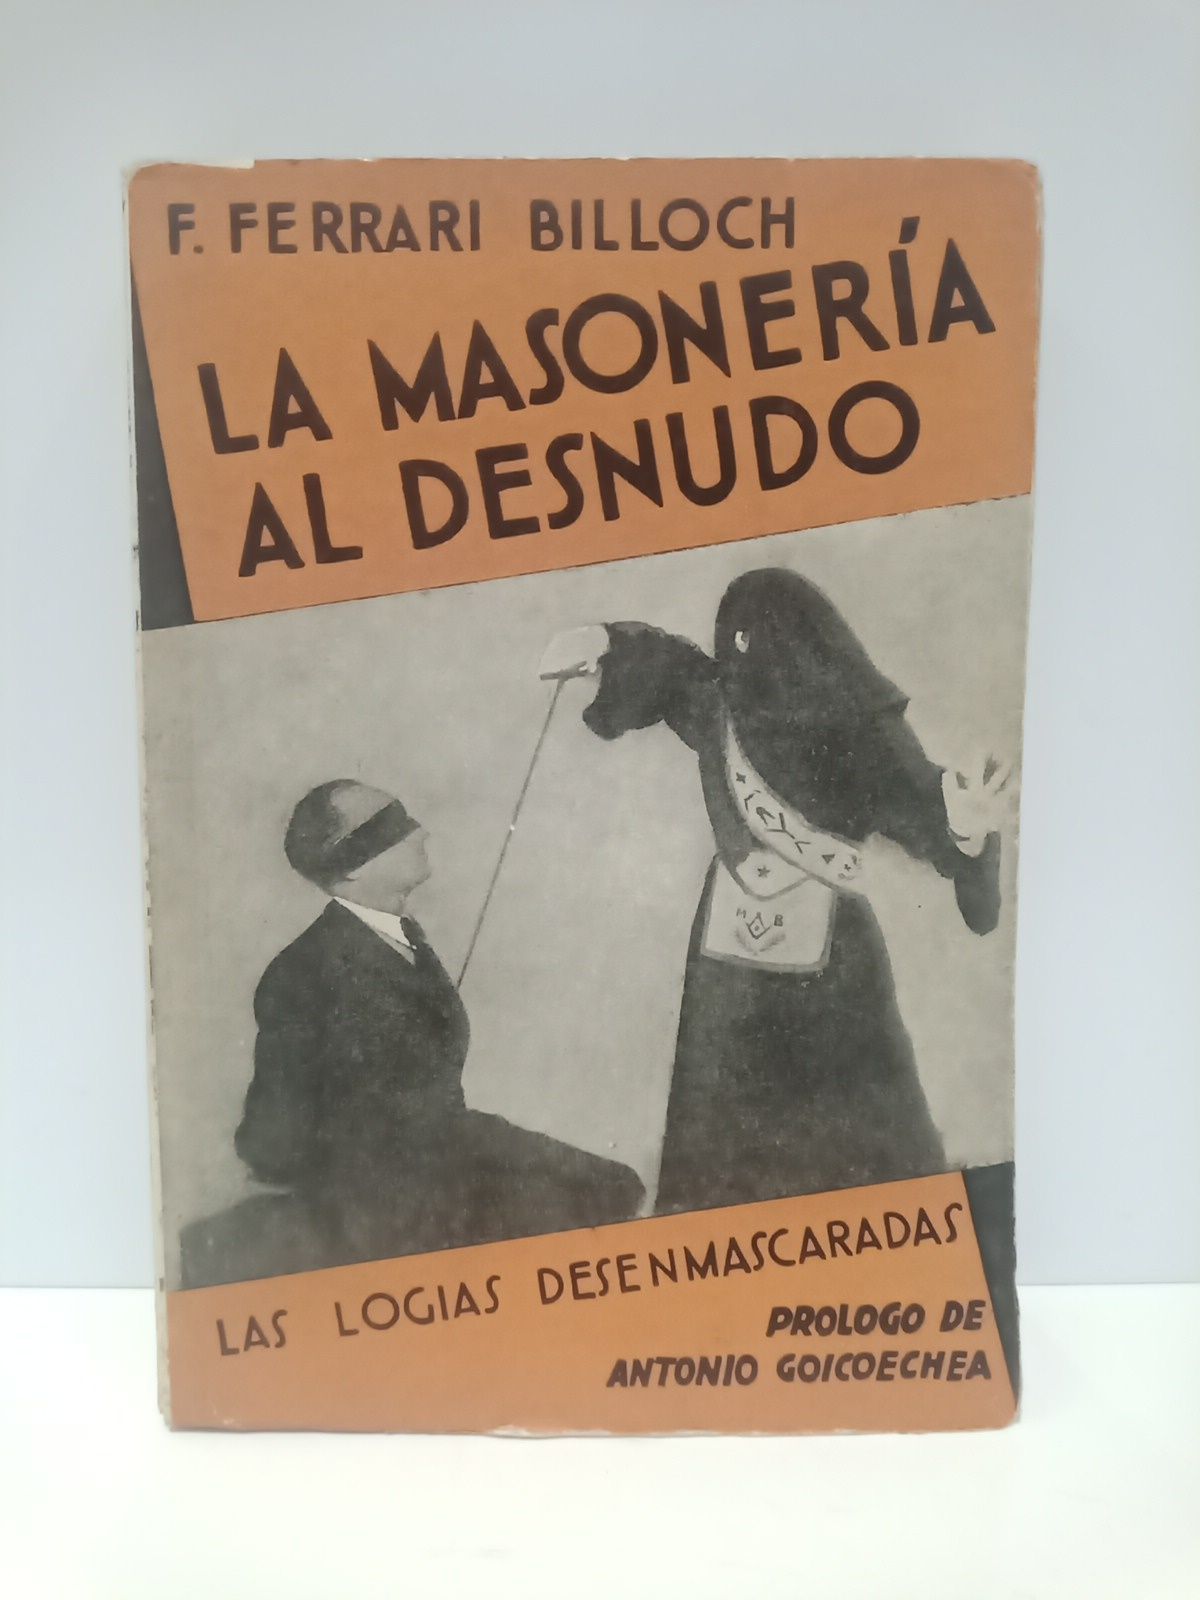 FERRARI BILLOCH, F. - La Masonera al desnudo: Las logias desenmascaradas /  Prlogo de Antonio Goicoechea y Cosculluela